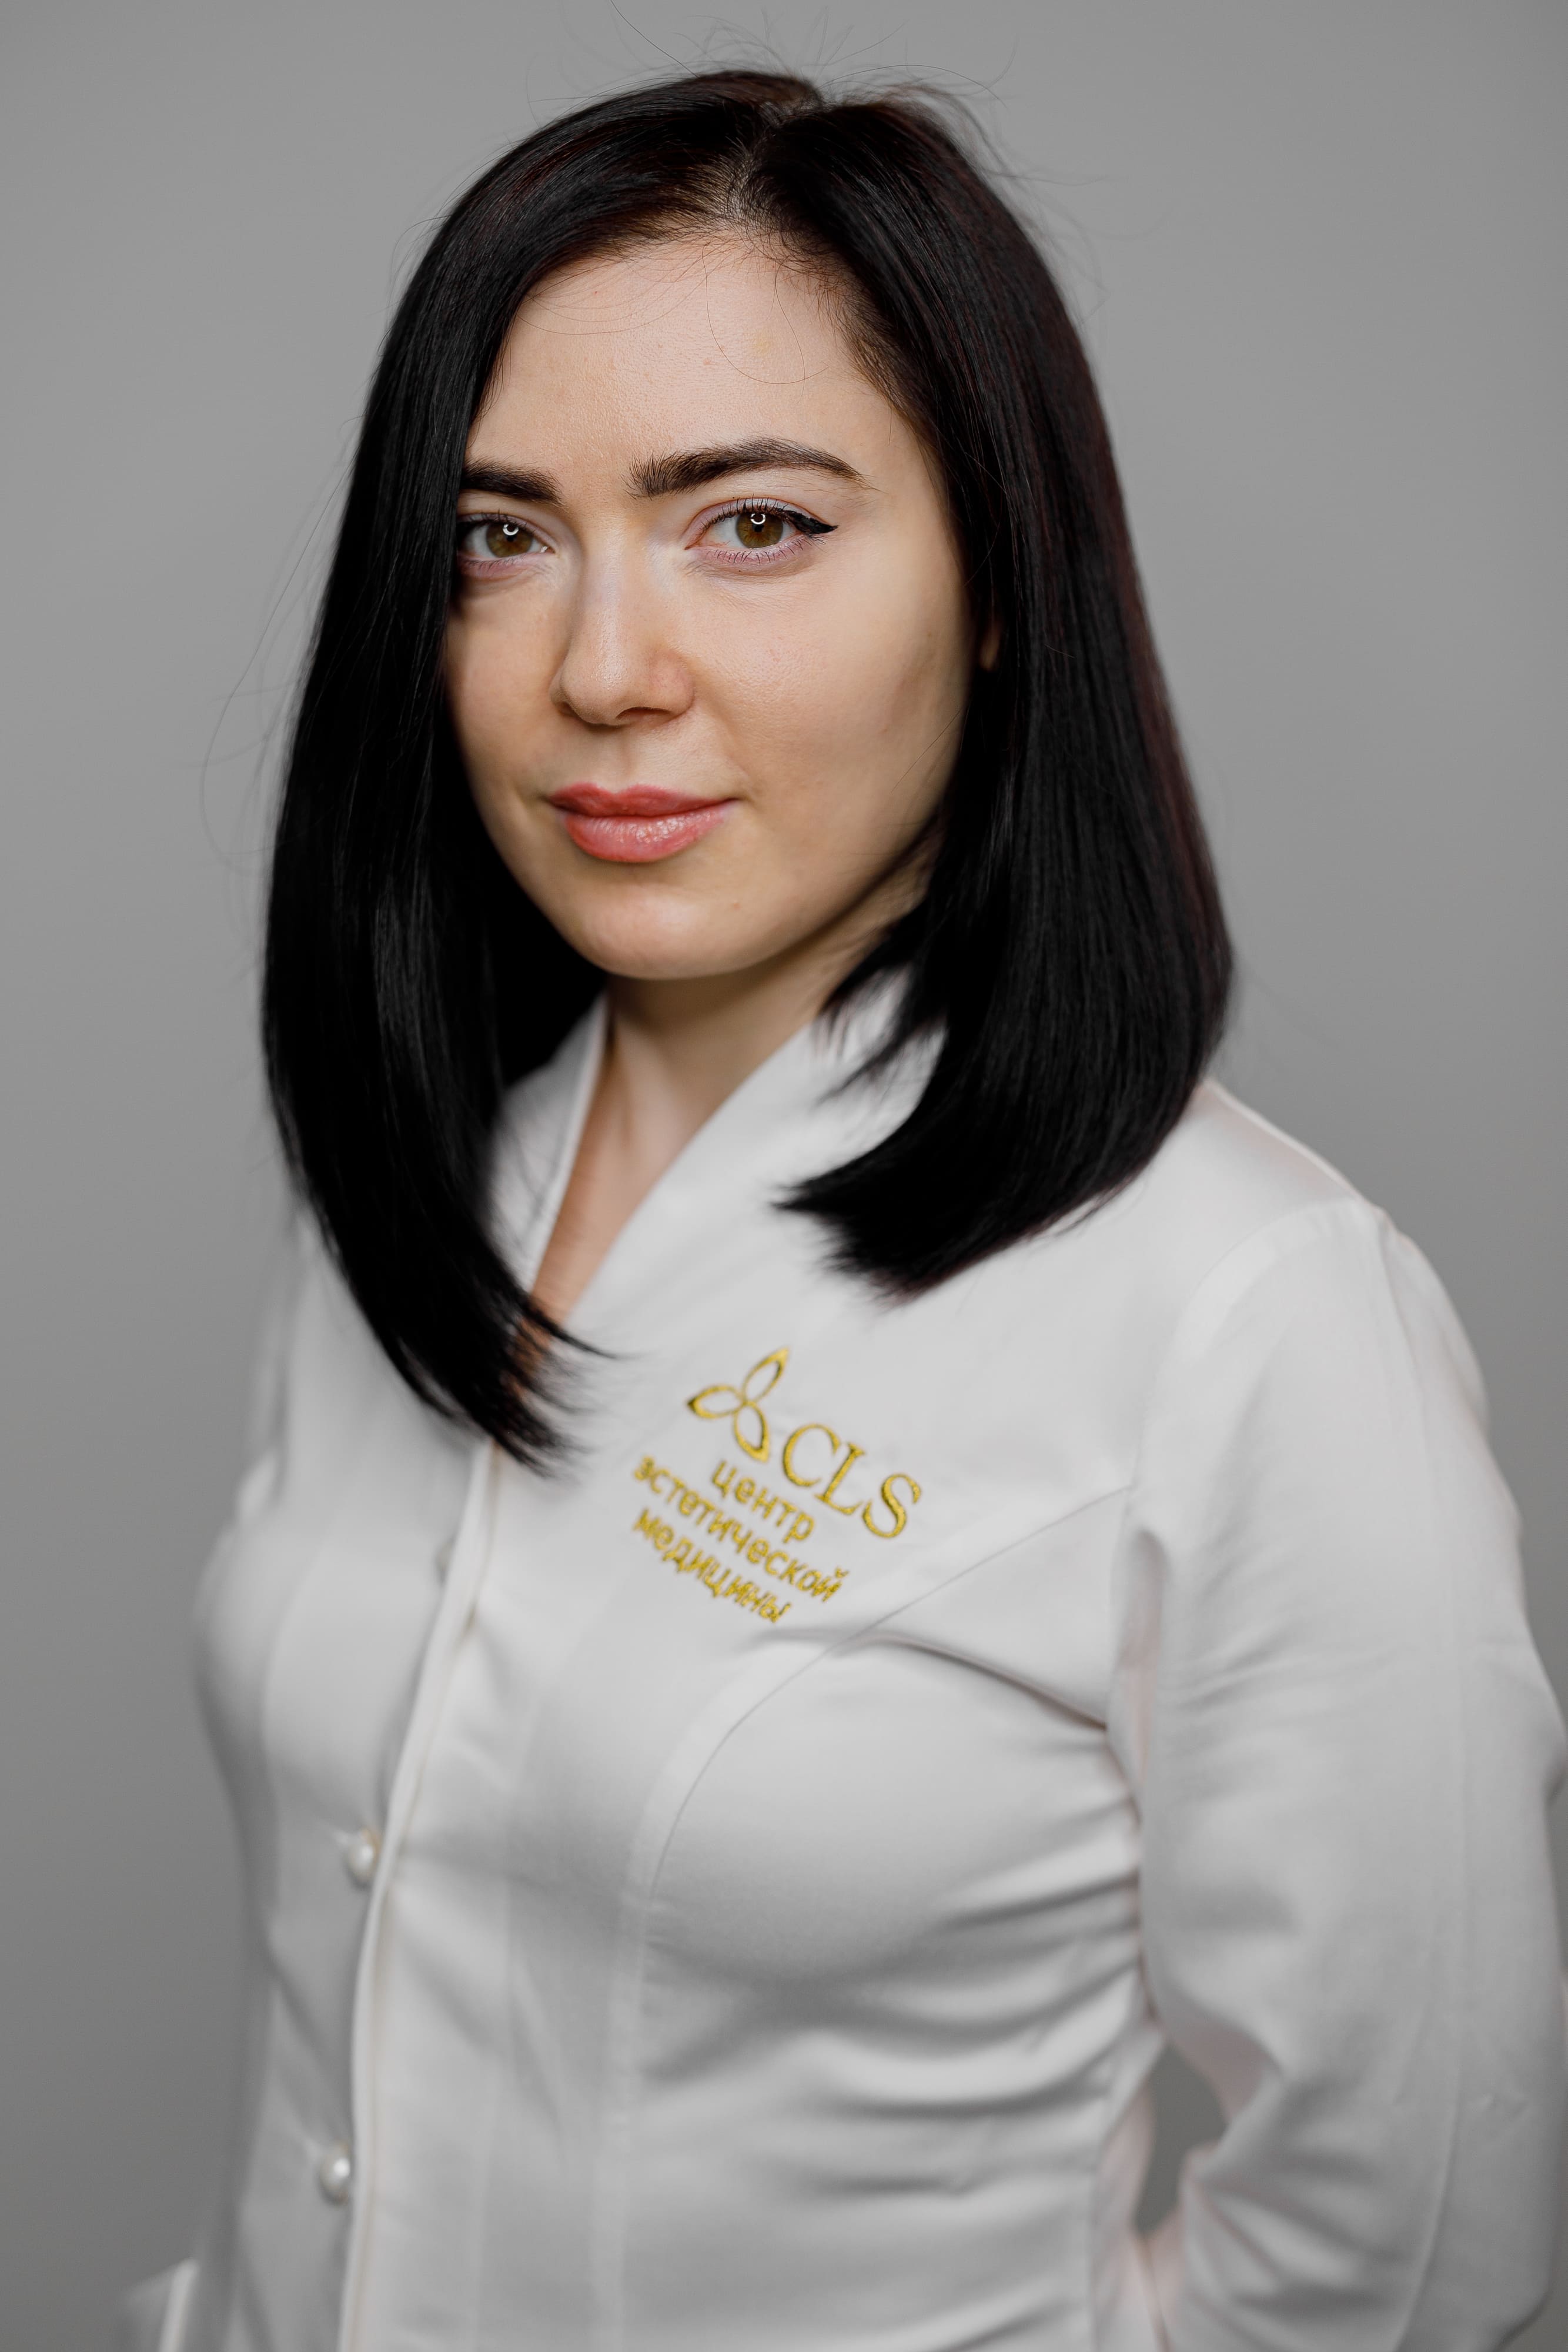 Ашурилаева Тина Тавкаевна. дерматолог, венеролог, косметолог